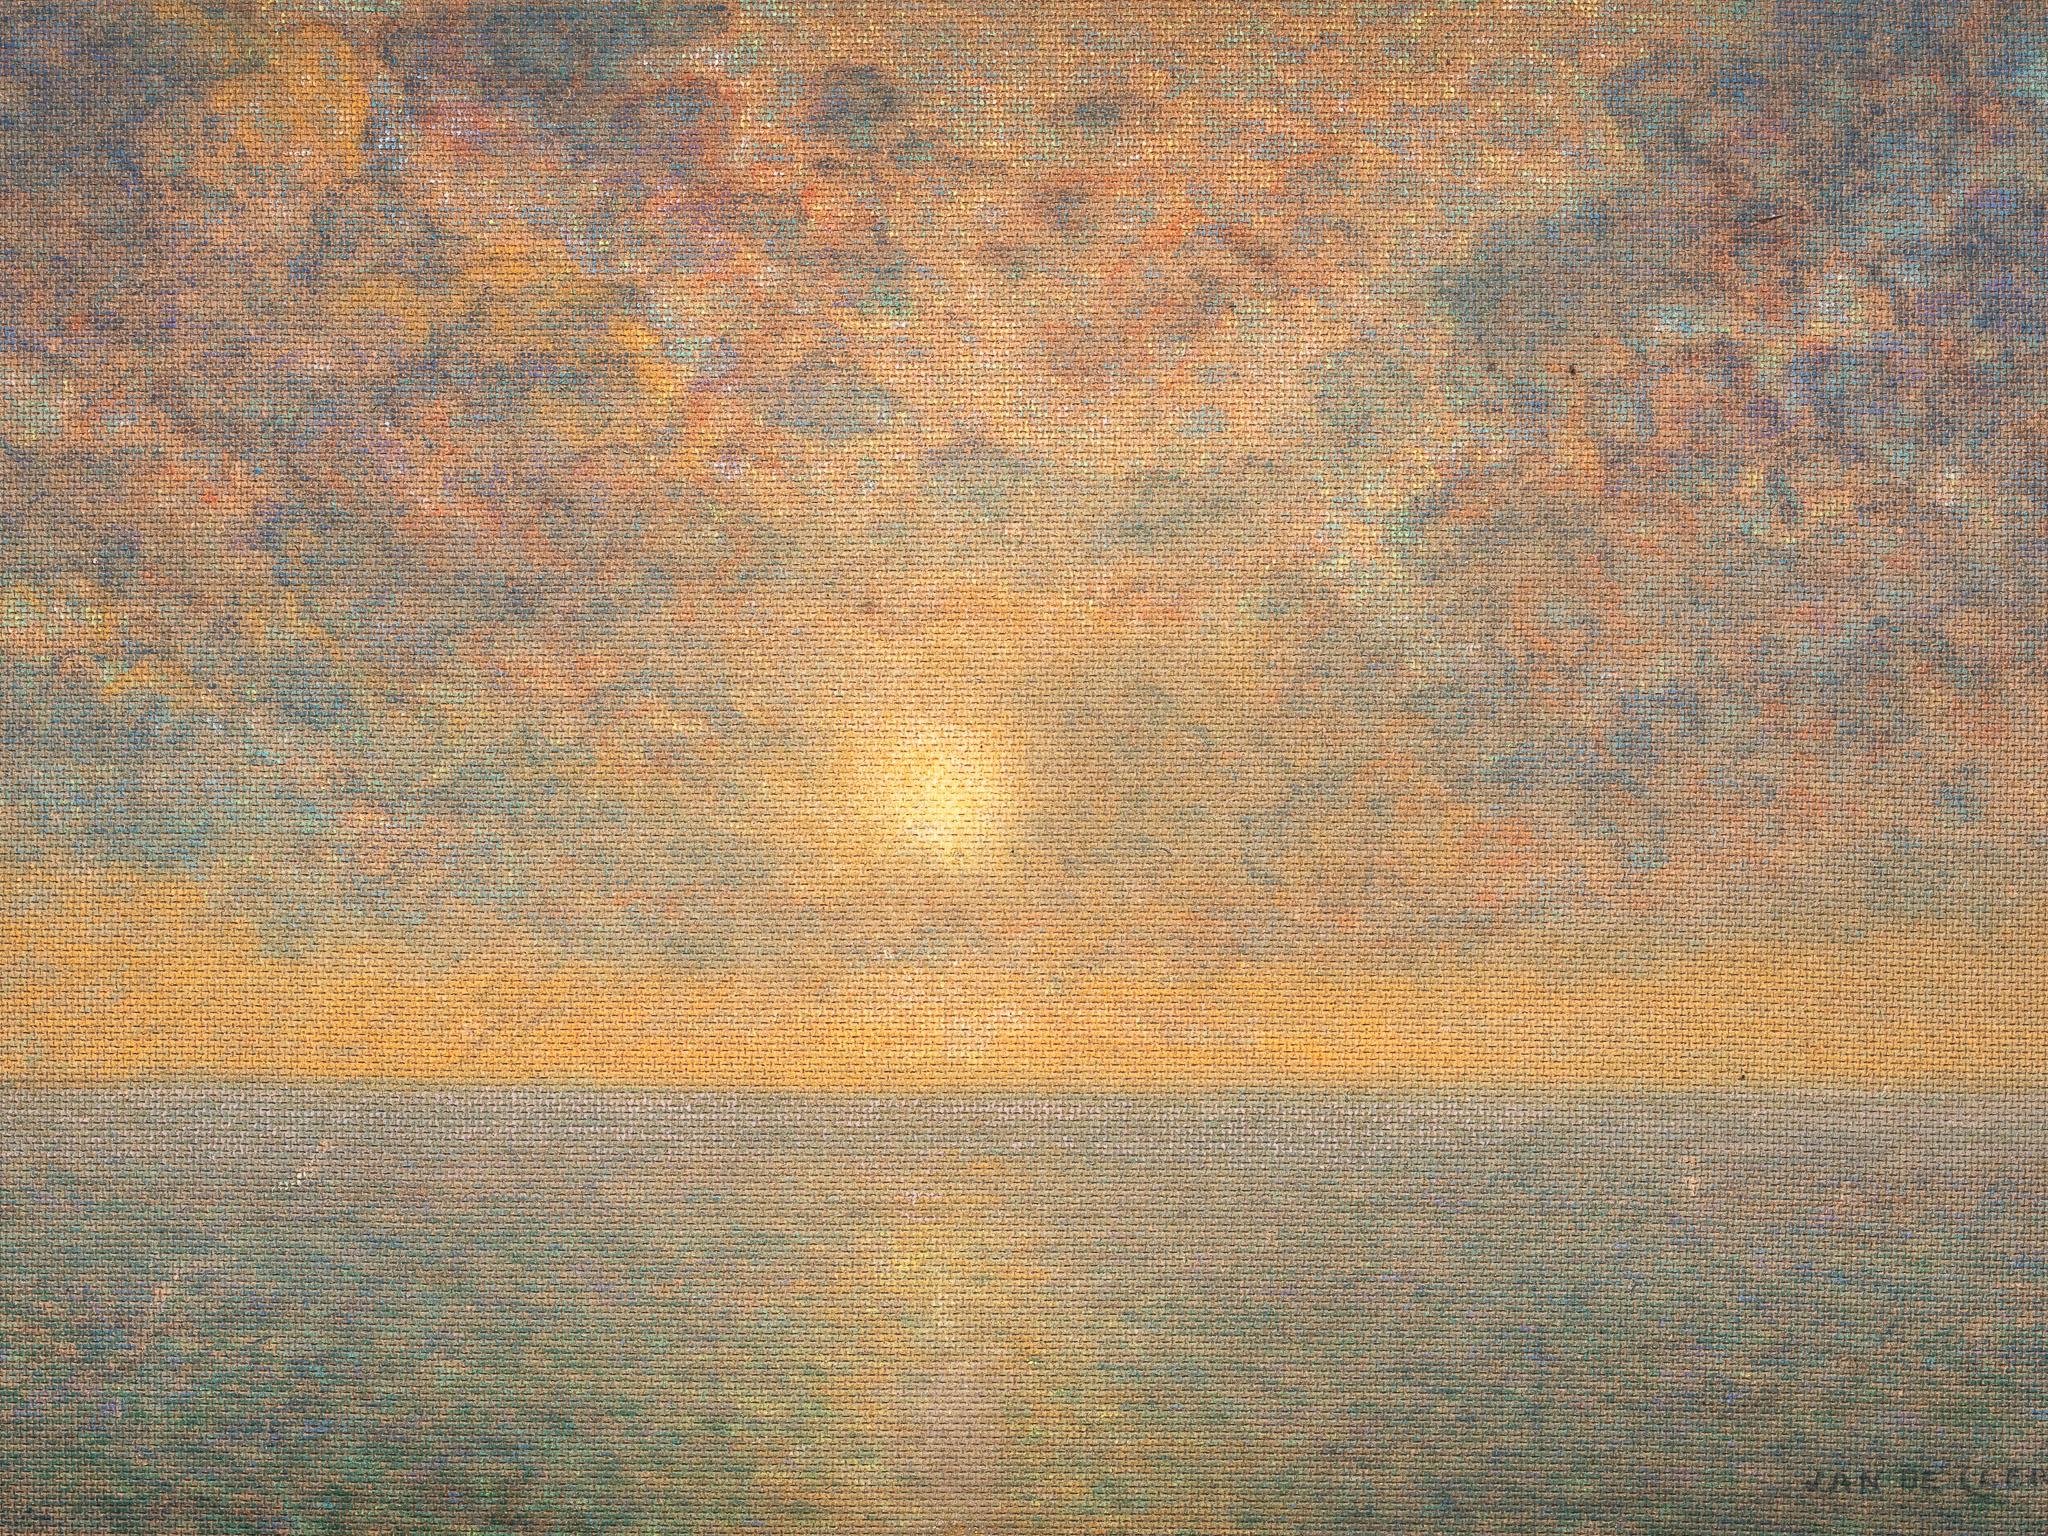 Unknown Landscape Painting – Sonnenuntergang über dem Meer, Jan de Clerck (1891 - 1964), Öl auf unbeleuchtetem Leinwand, signiert.